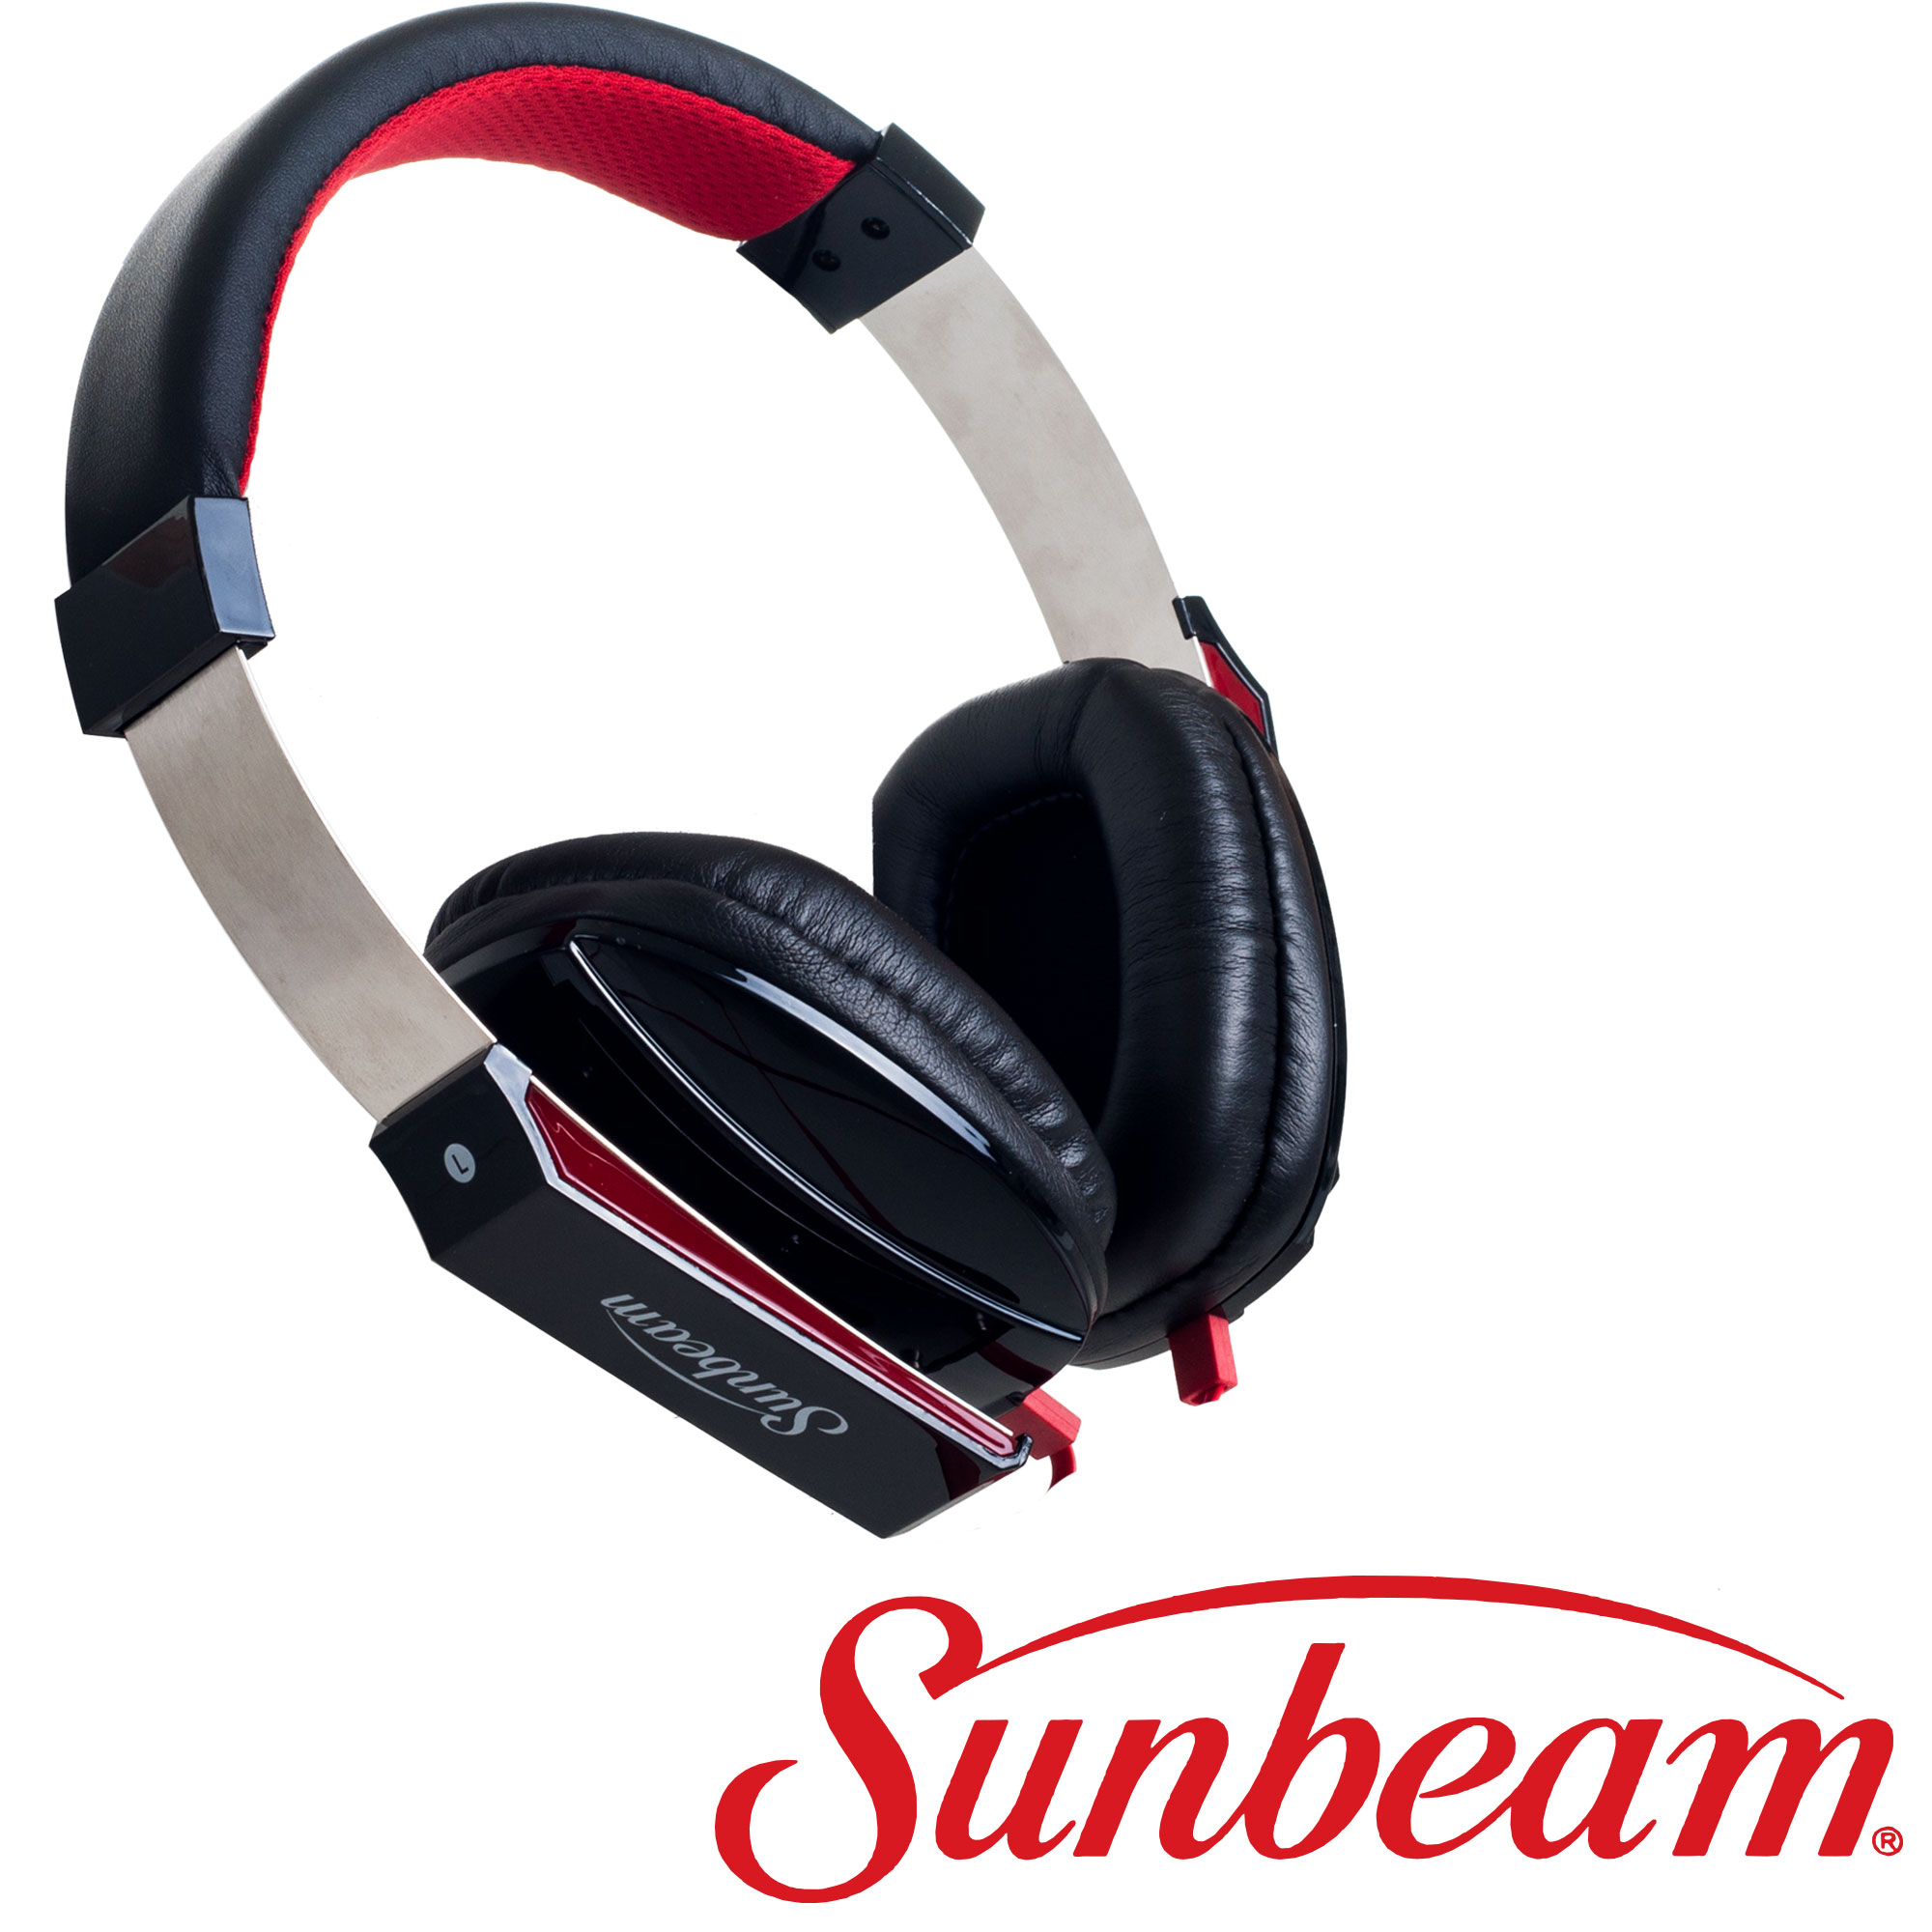 Sunbeam Stereo Big Bass Headphones with Microphone - Free Shipping